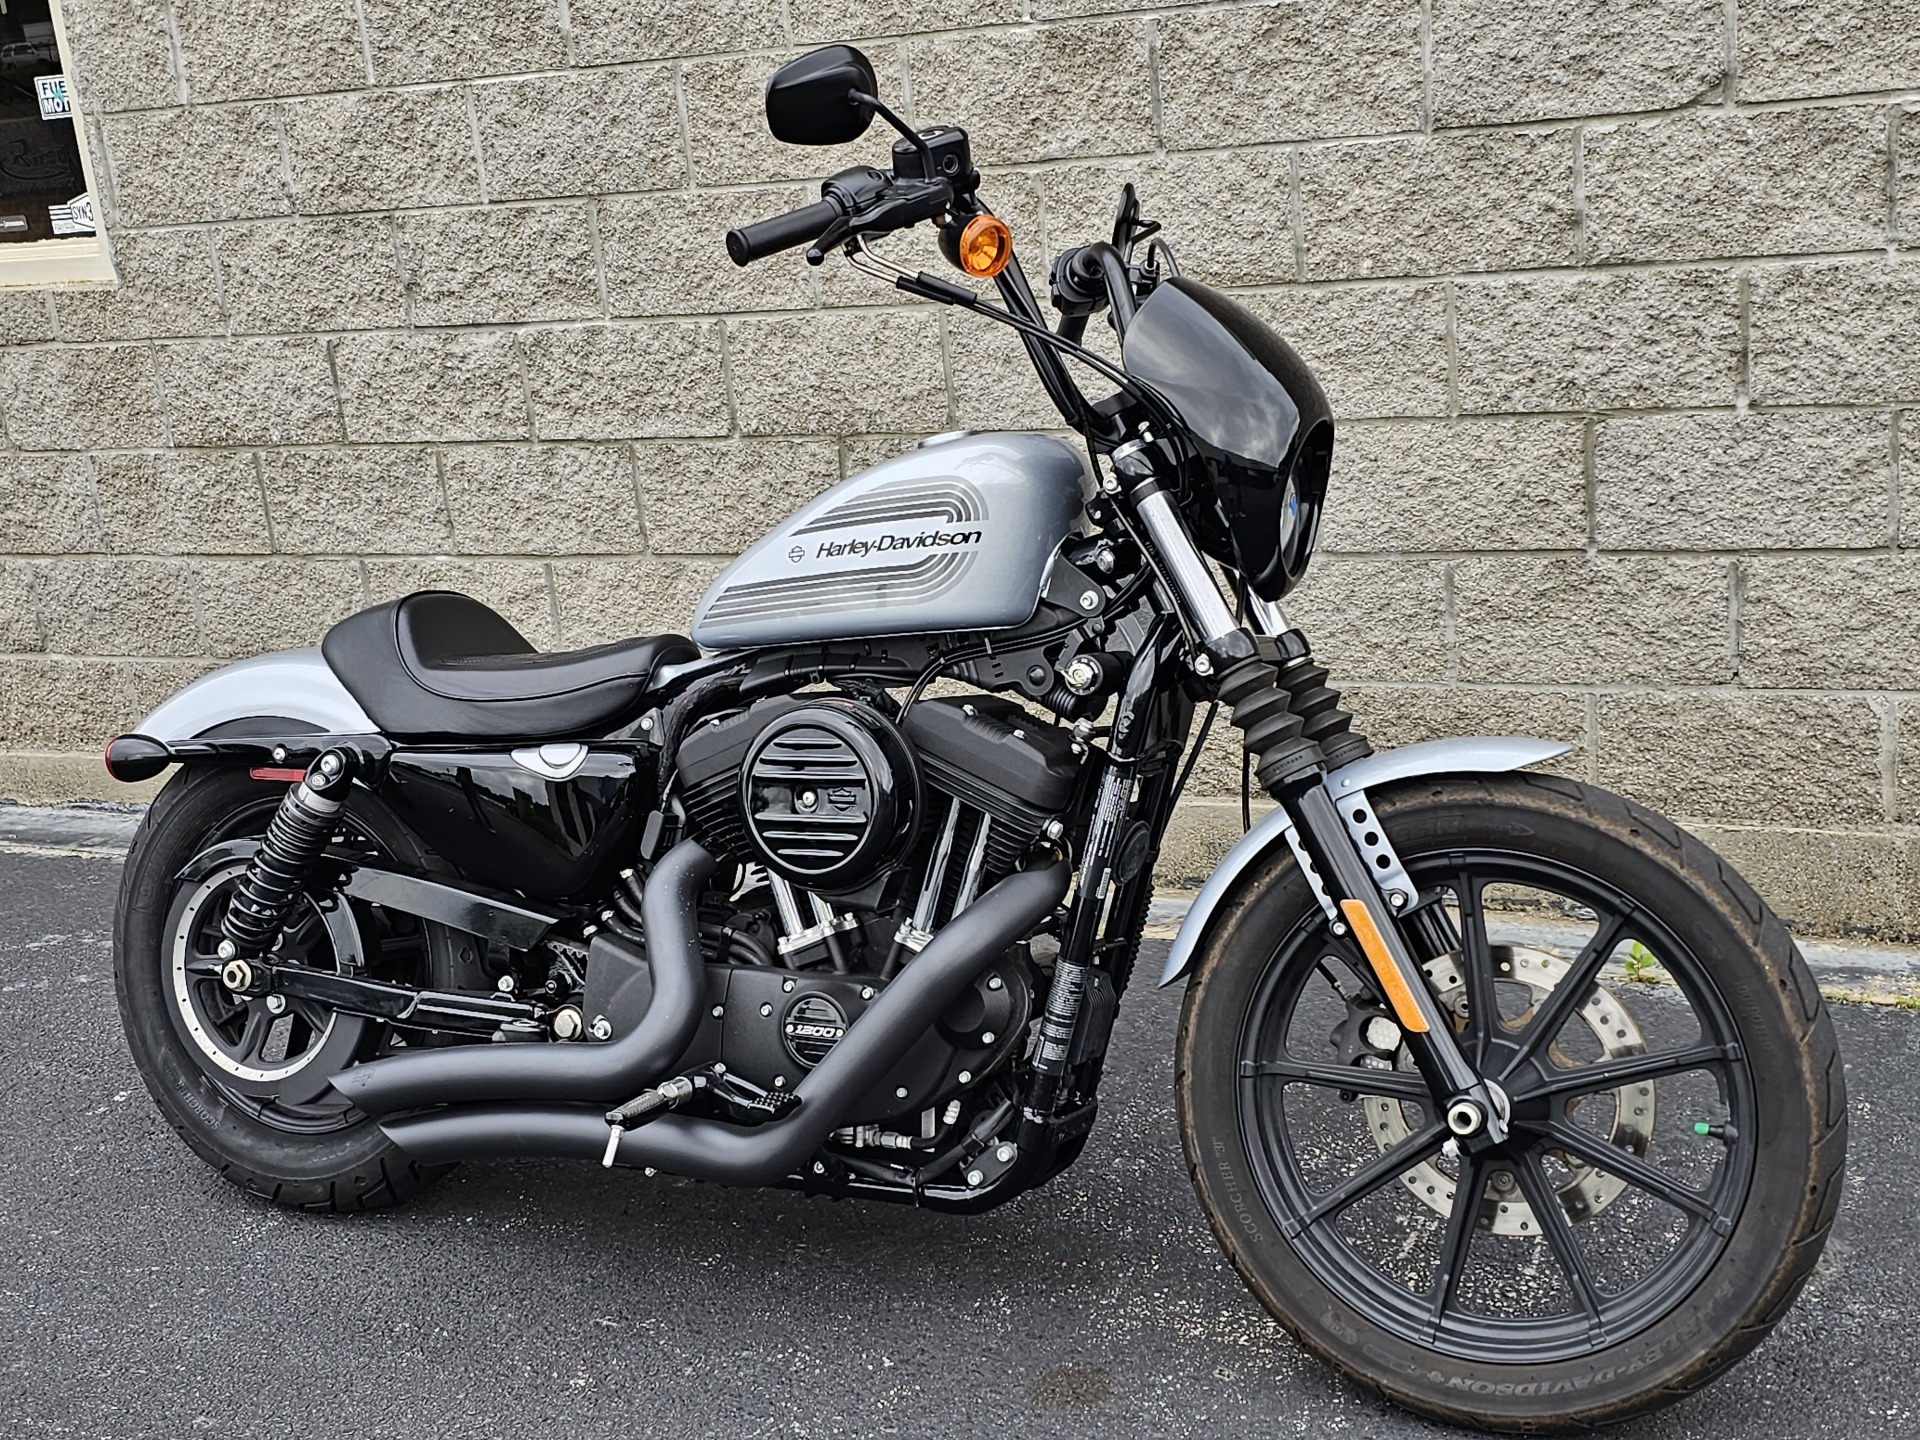 2020 Harley-Davidson Iron 1200™ in Columbus, Georgia - Photo 2